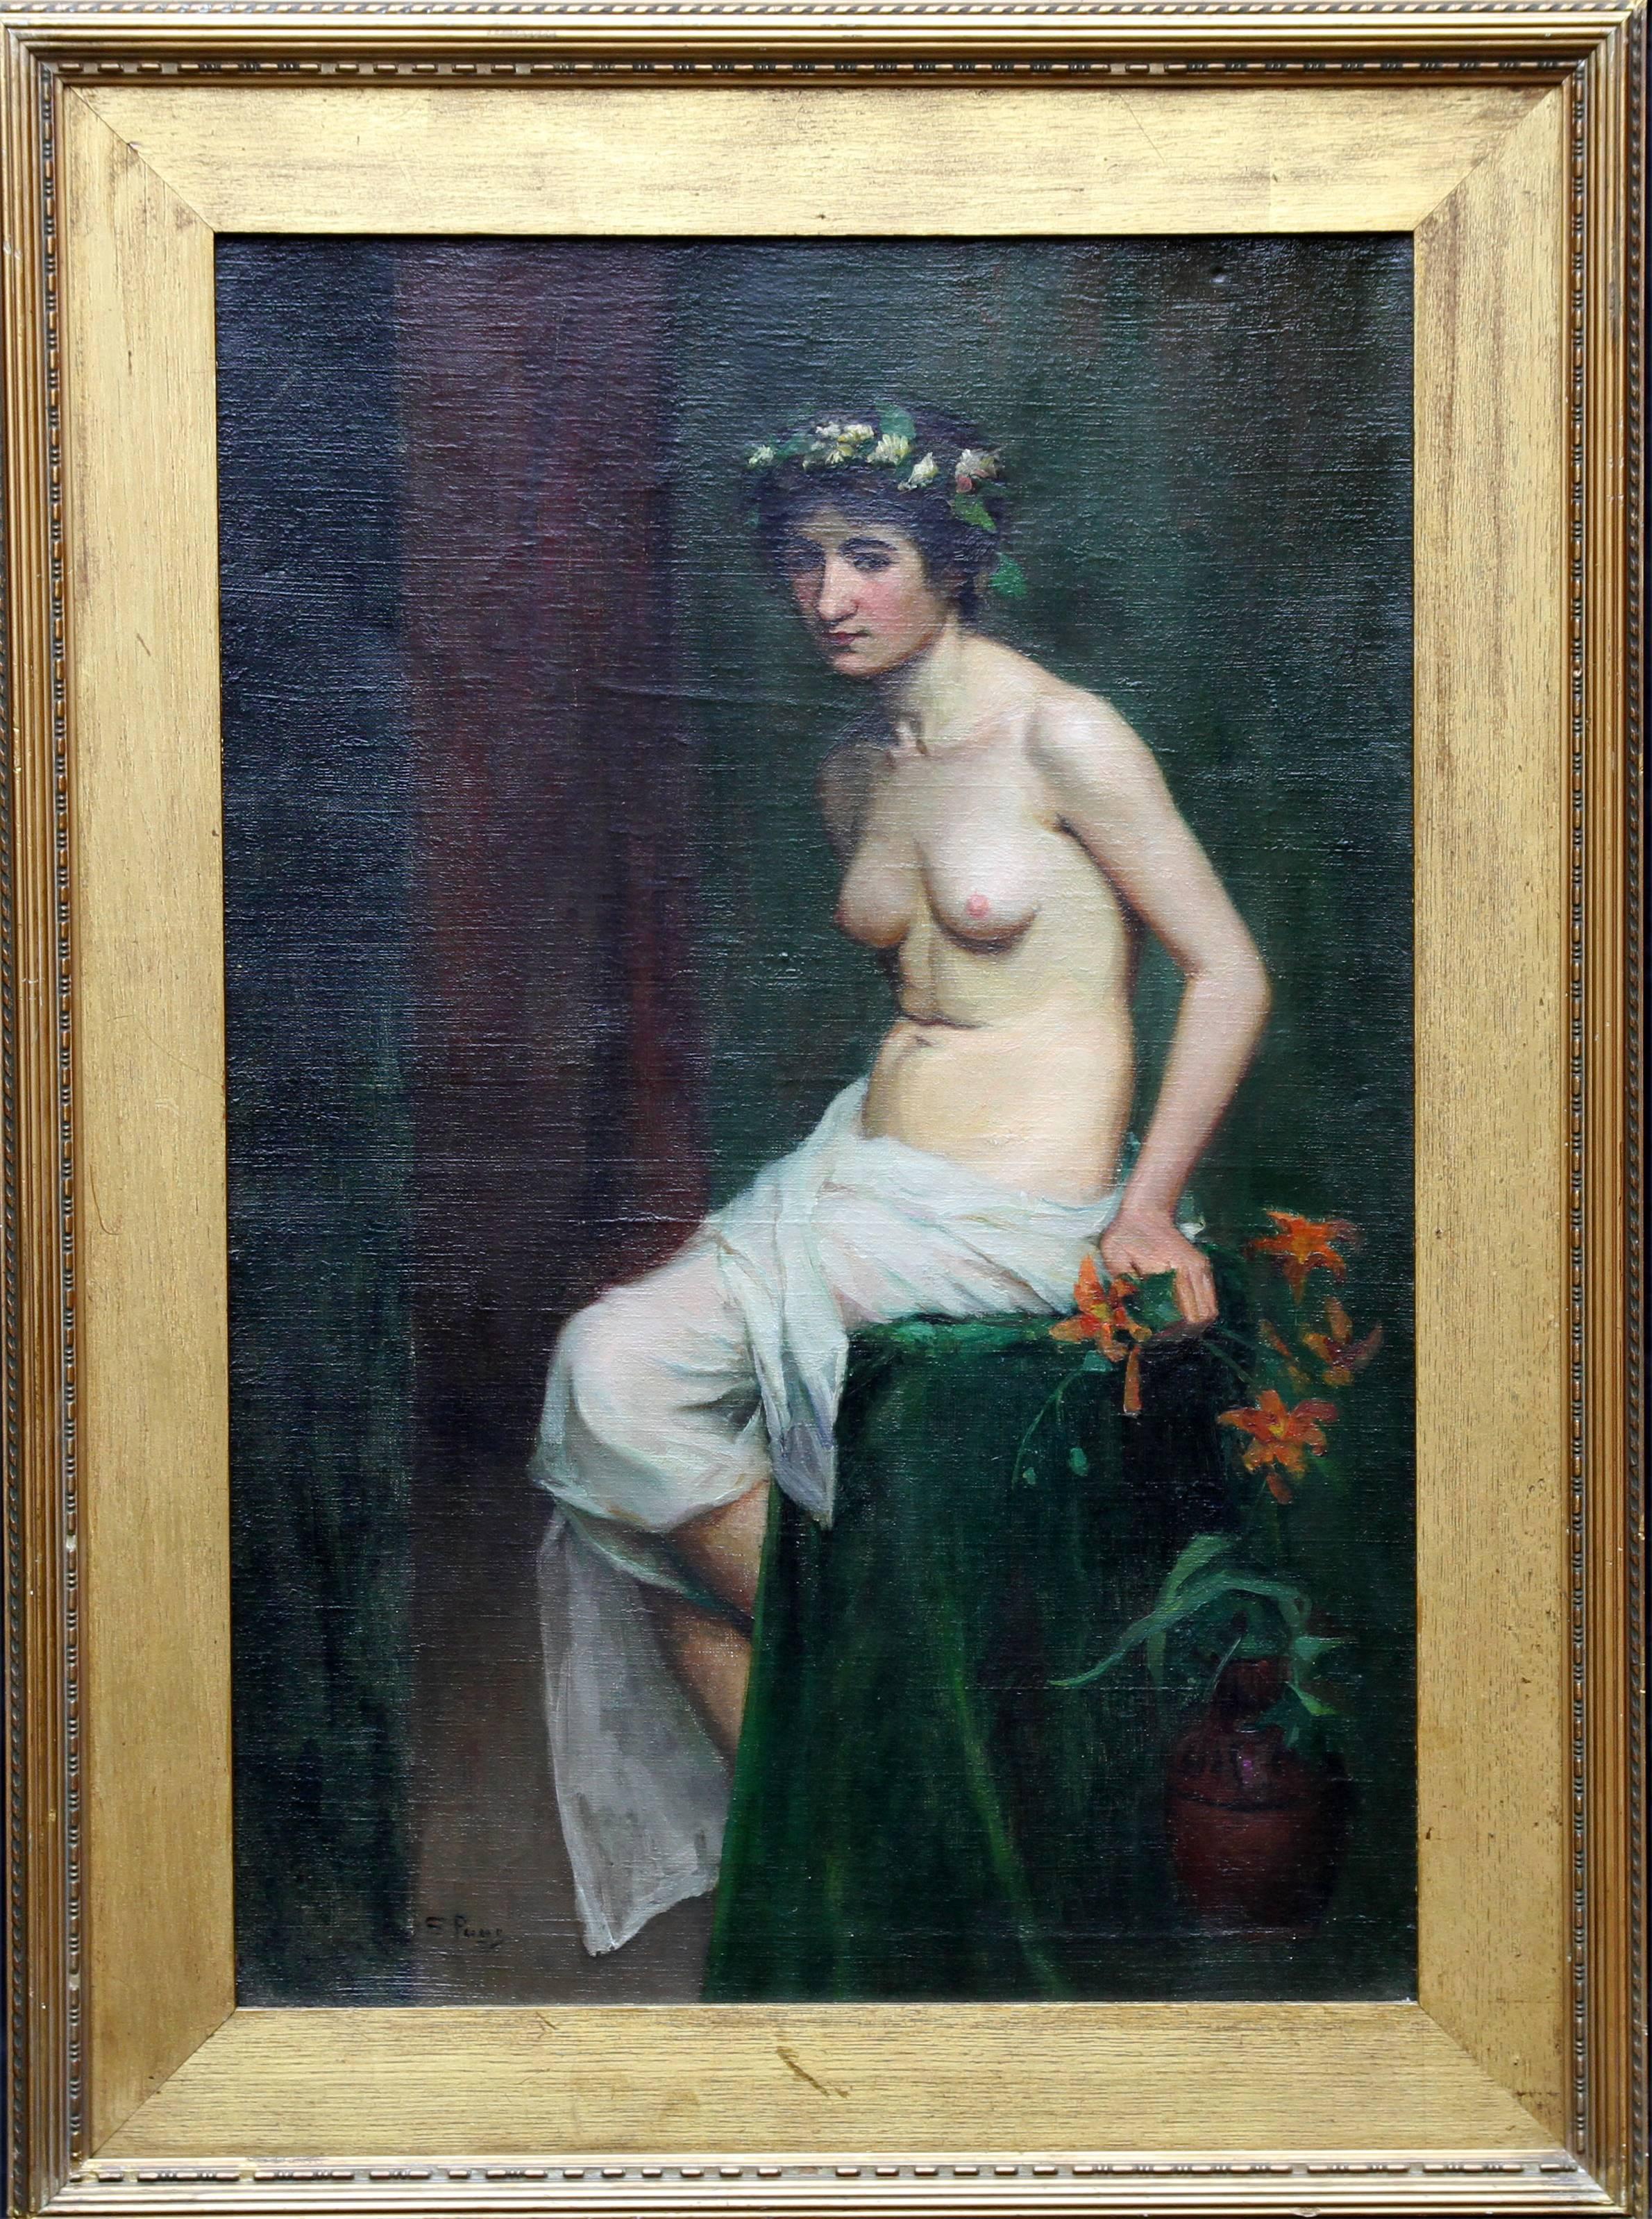 Sara Wells Page Nude Painting - Pre-Raphaelite Beauty - Victorian art nude oil portrait - British female artist 